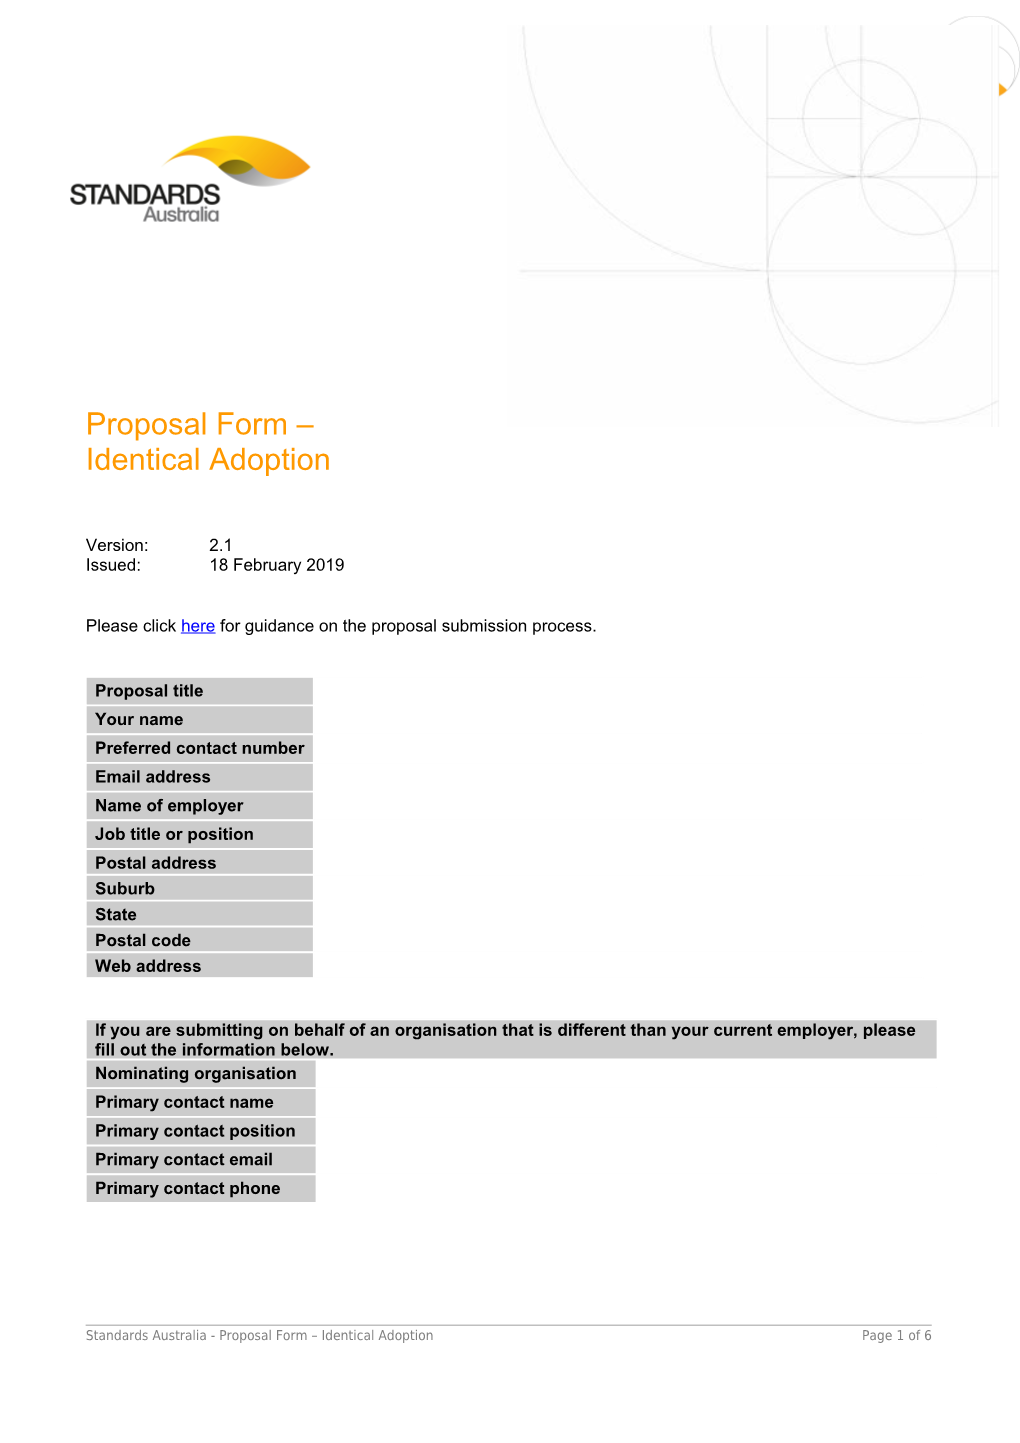 Proposal Form - Identical Adoption (FO 102)